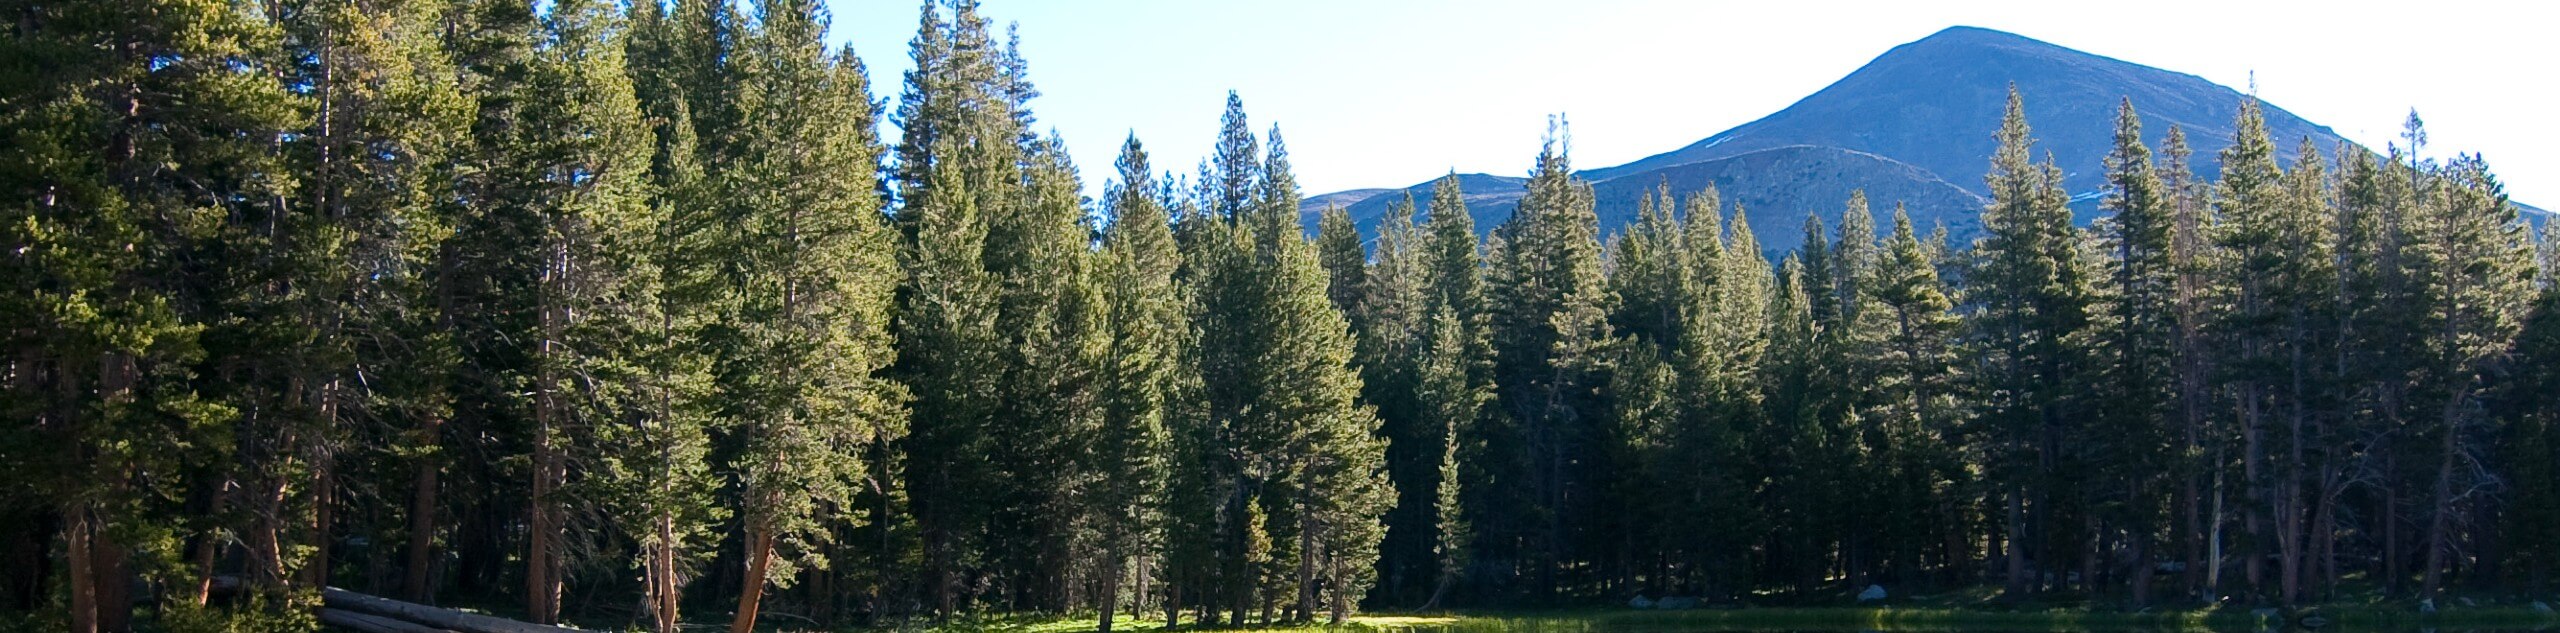 Mono Meadow Trail